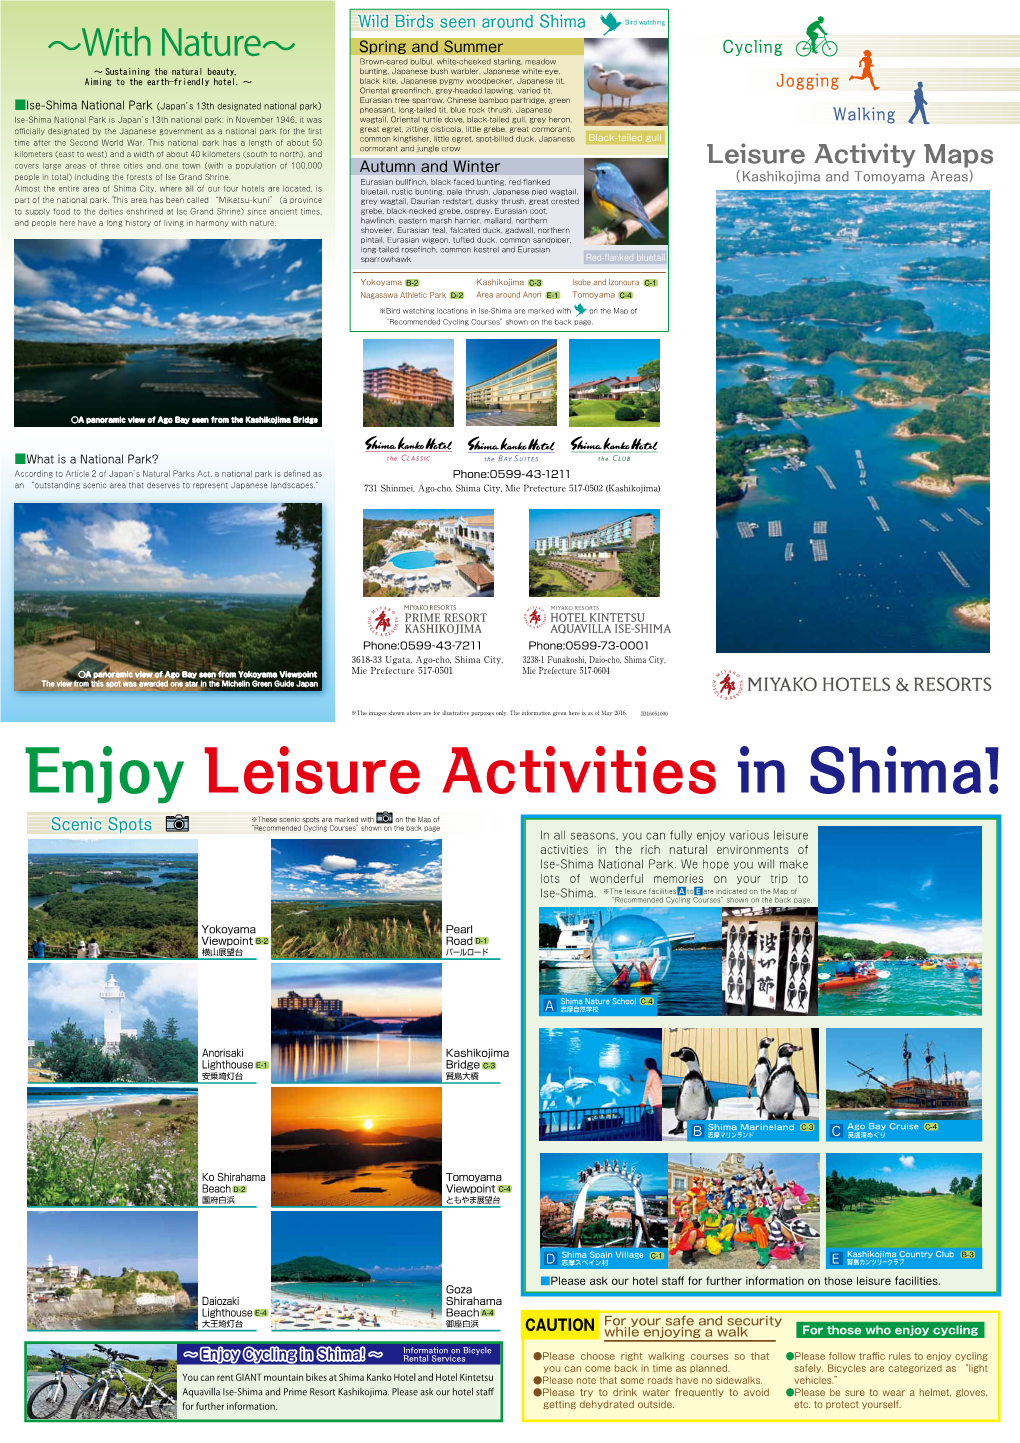 Enjoy Leisure Activities in Shima!